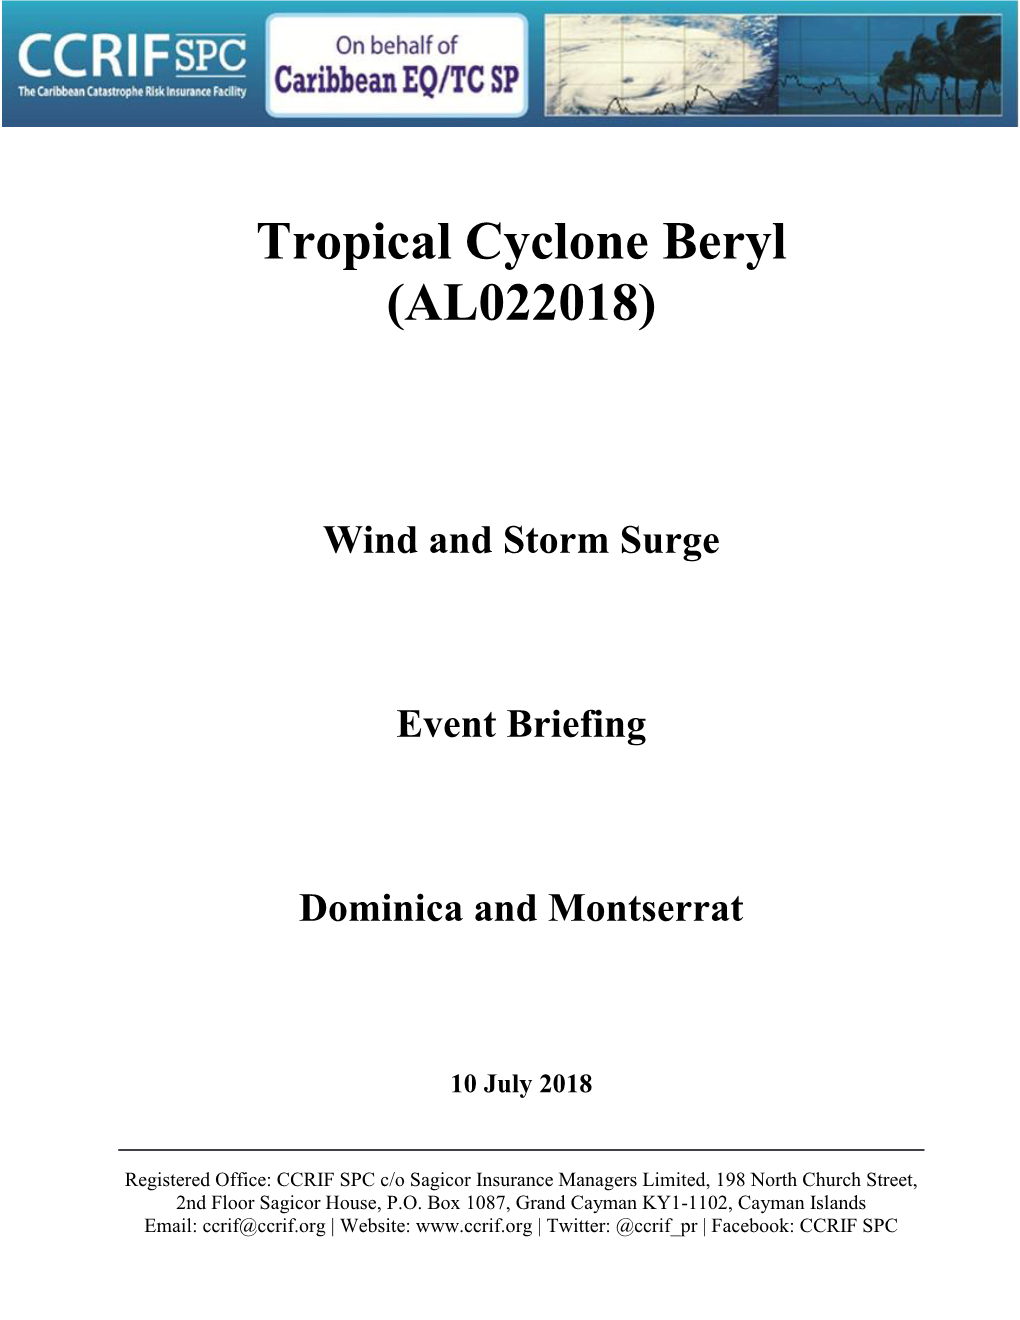 Tropical Cyclone Beryl (AL022018)